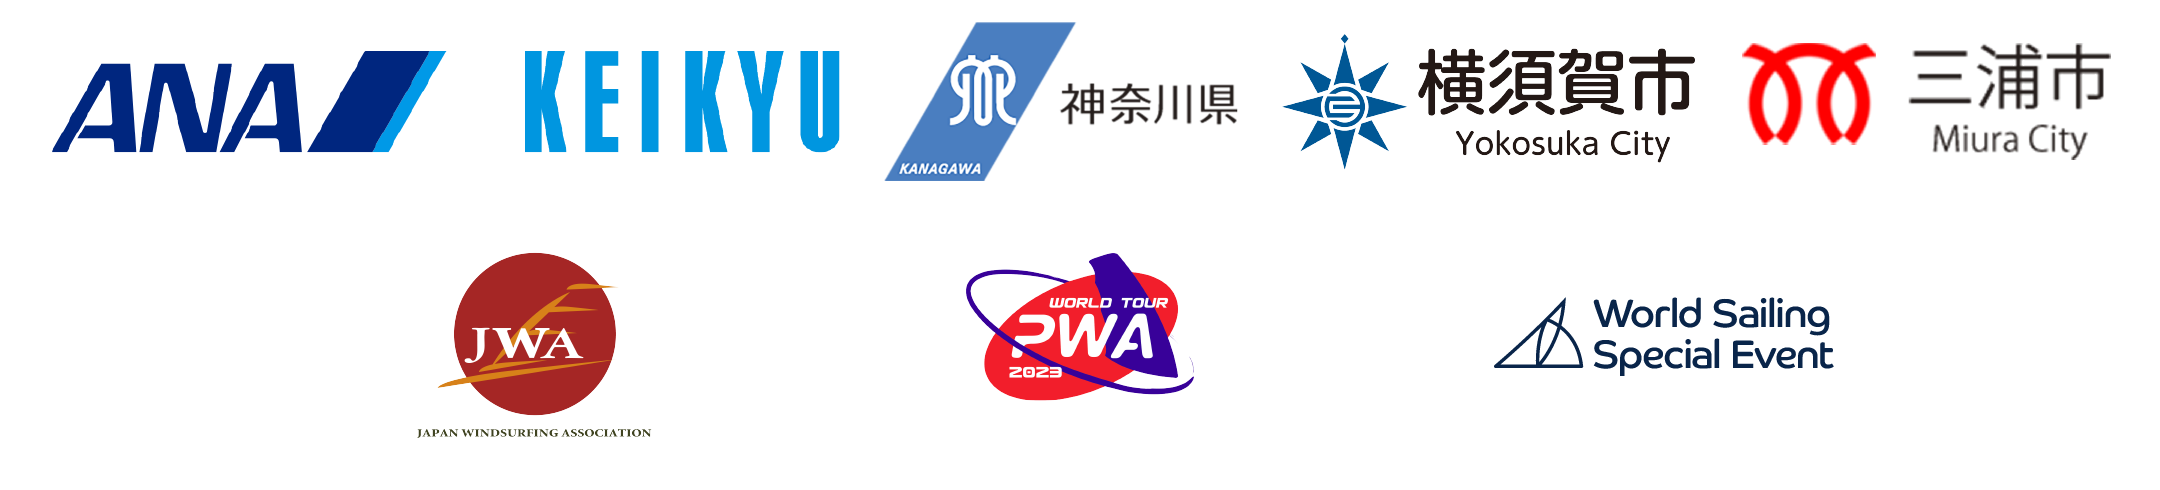 ANA KEIKYU 神奈川県 横須賀市 三浦市 JWA PWA World Sailing Special Event